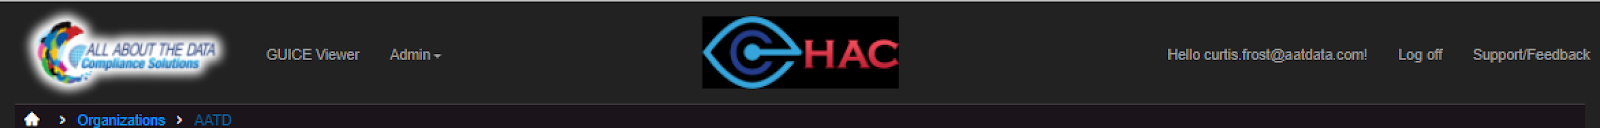 C-HAC-Dashboard